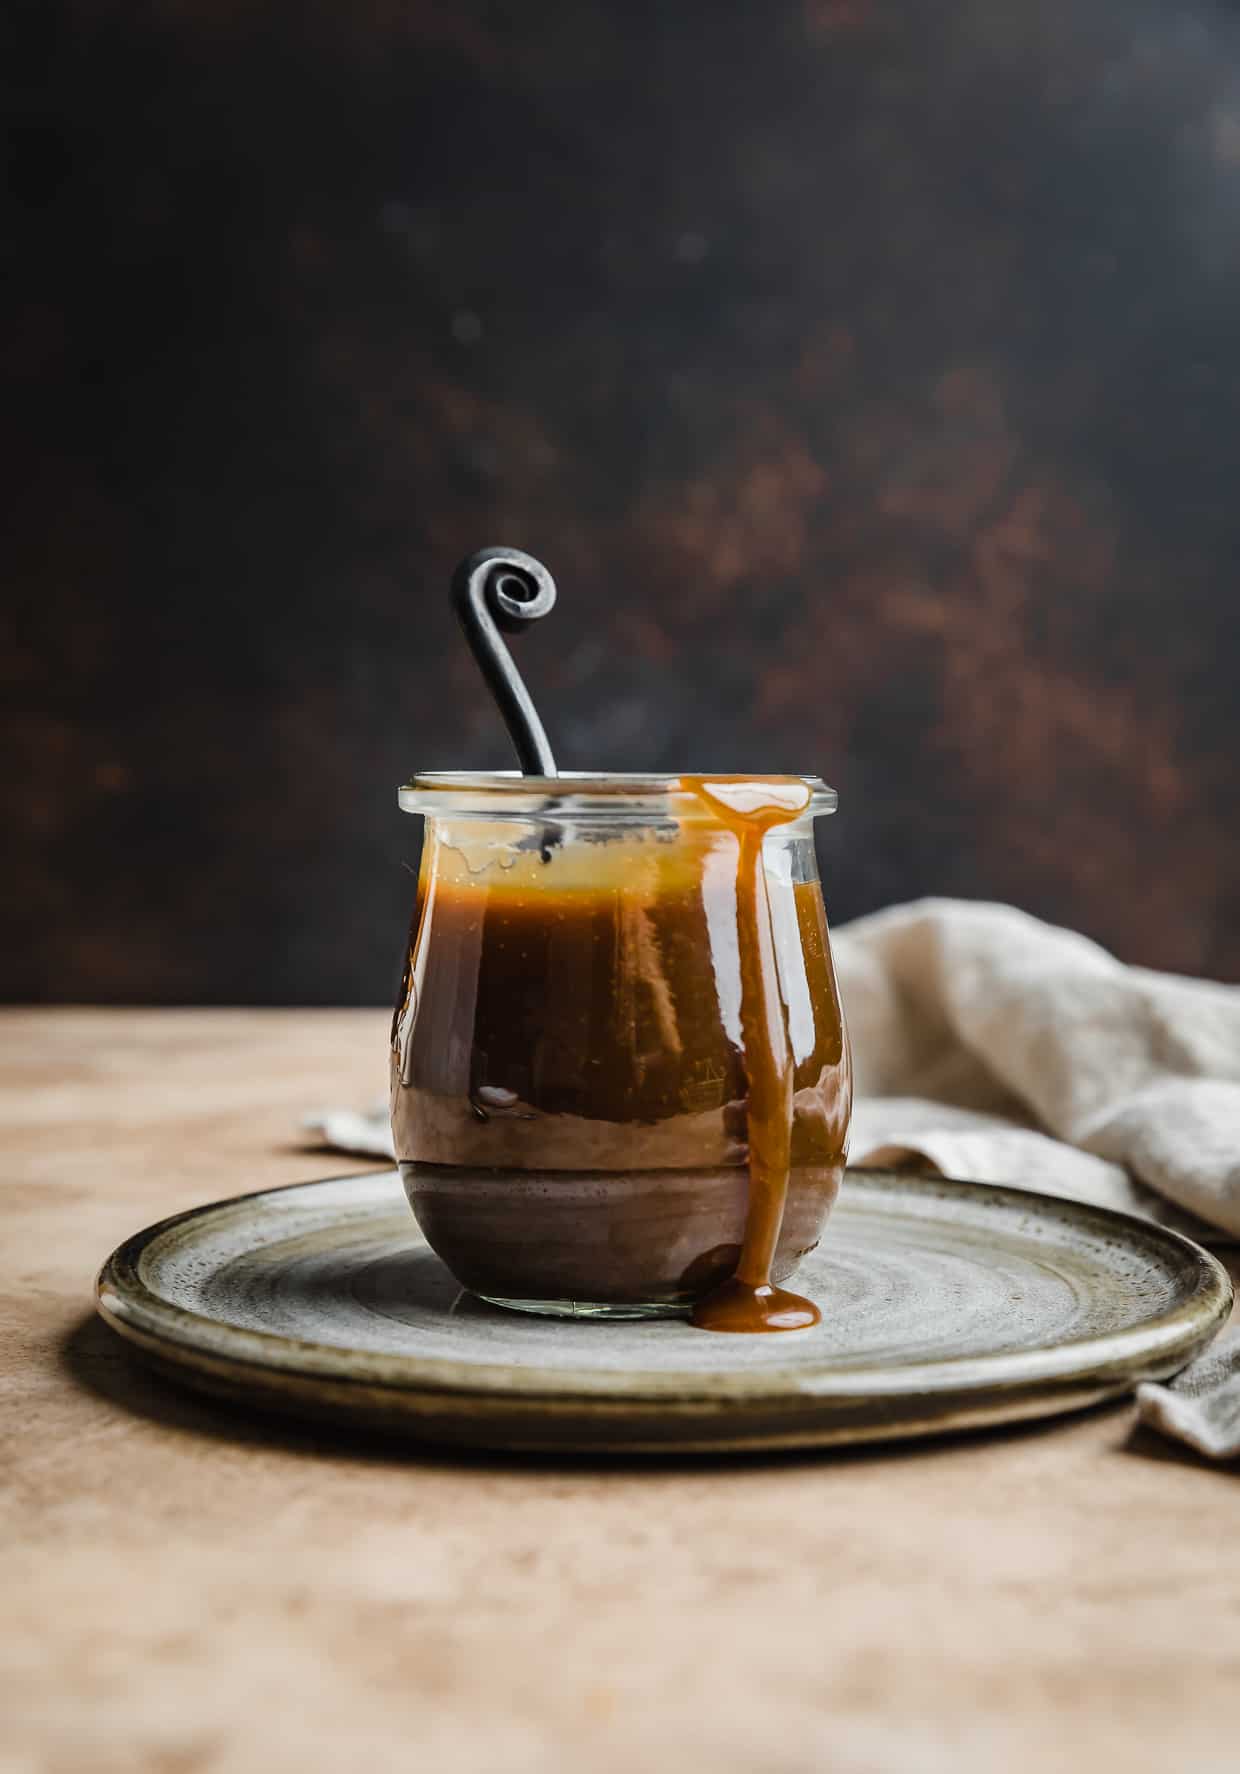 Homemade butterscotch recipe in a glass jar against a brown background.